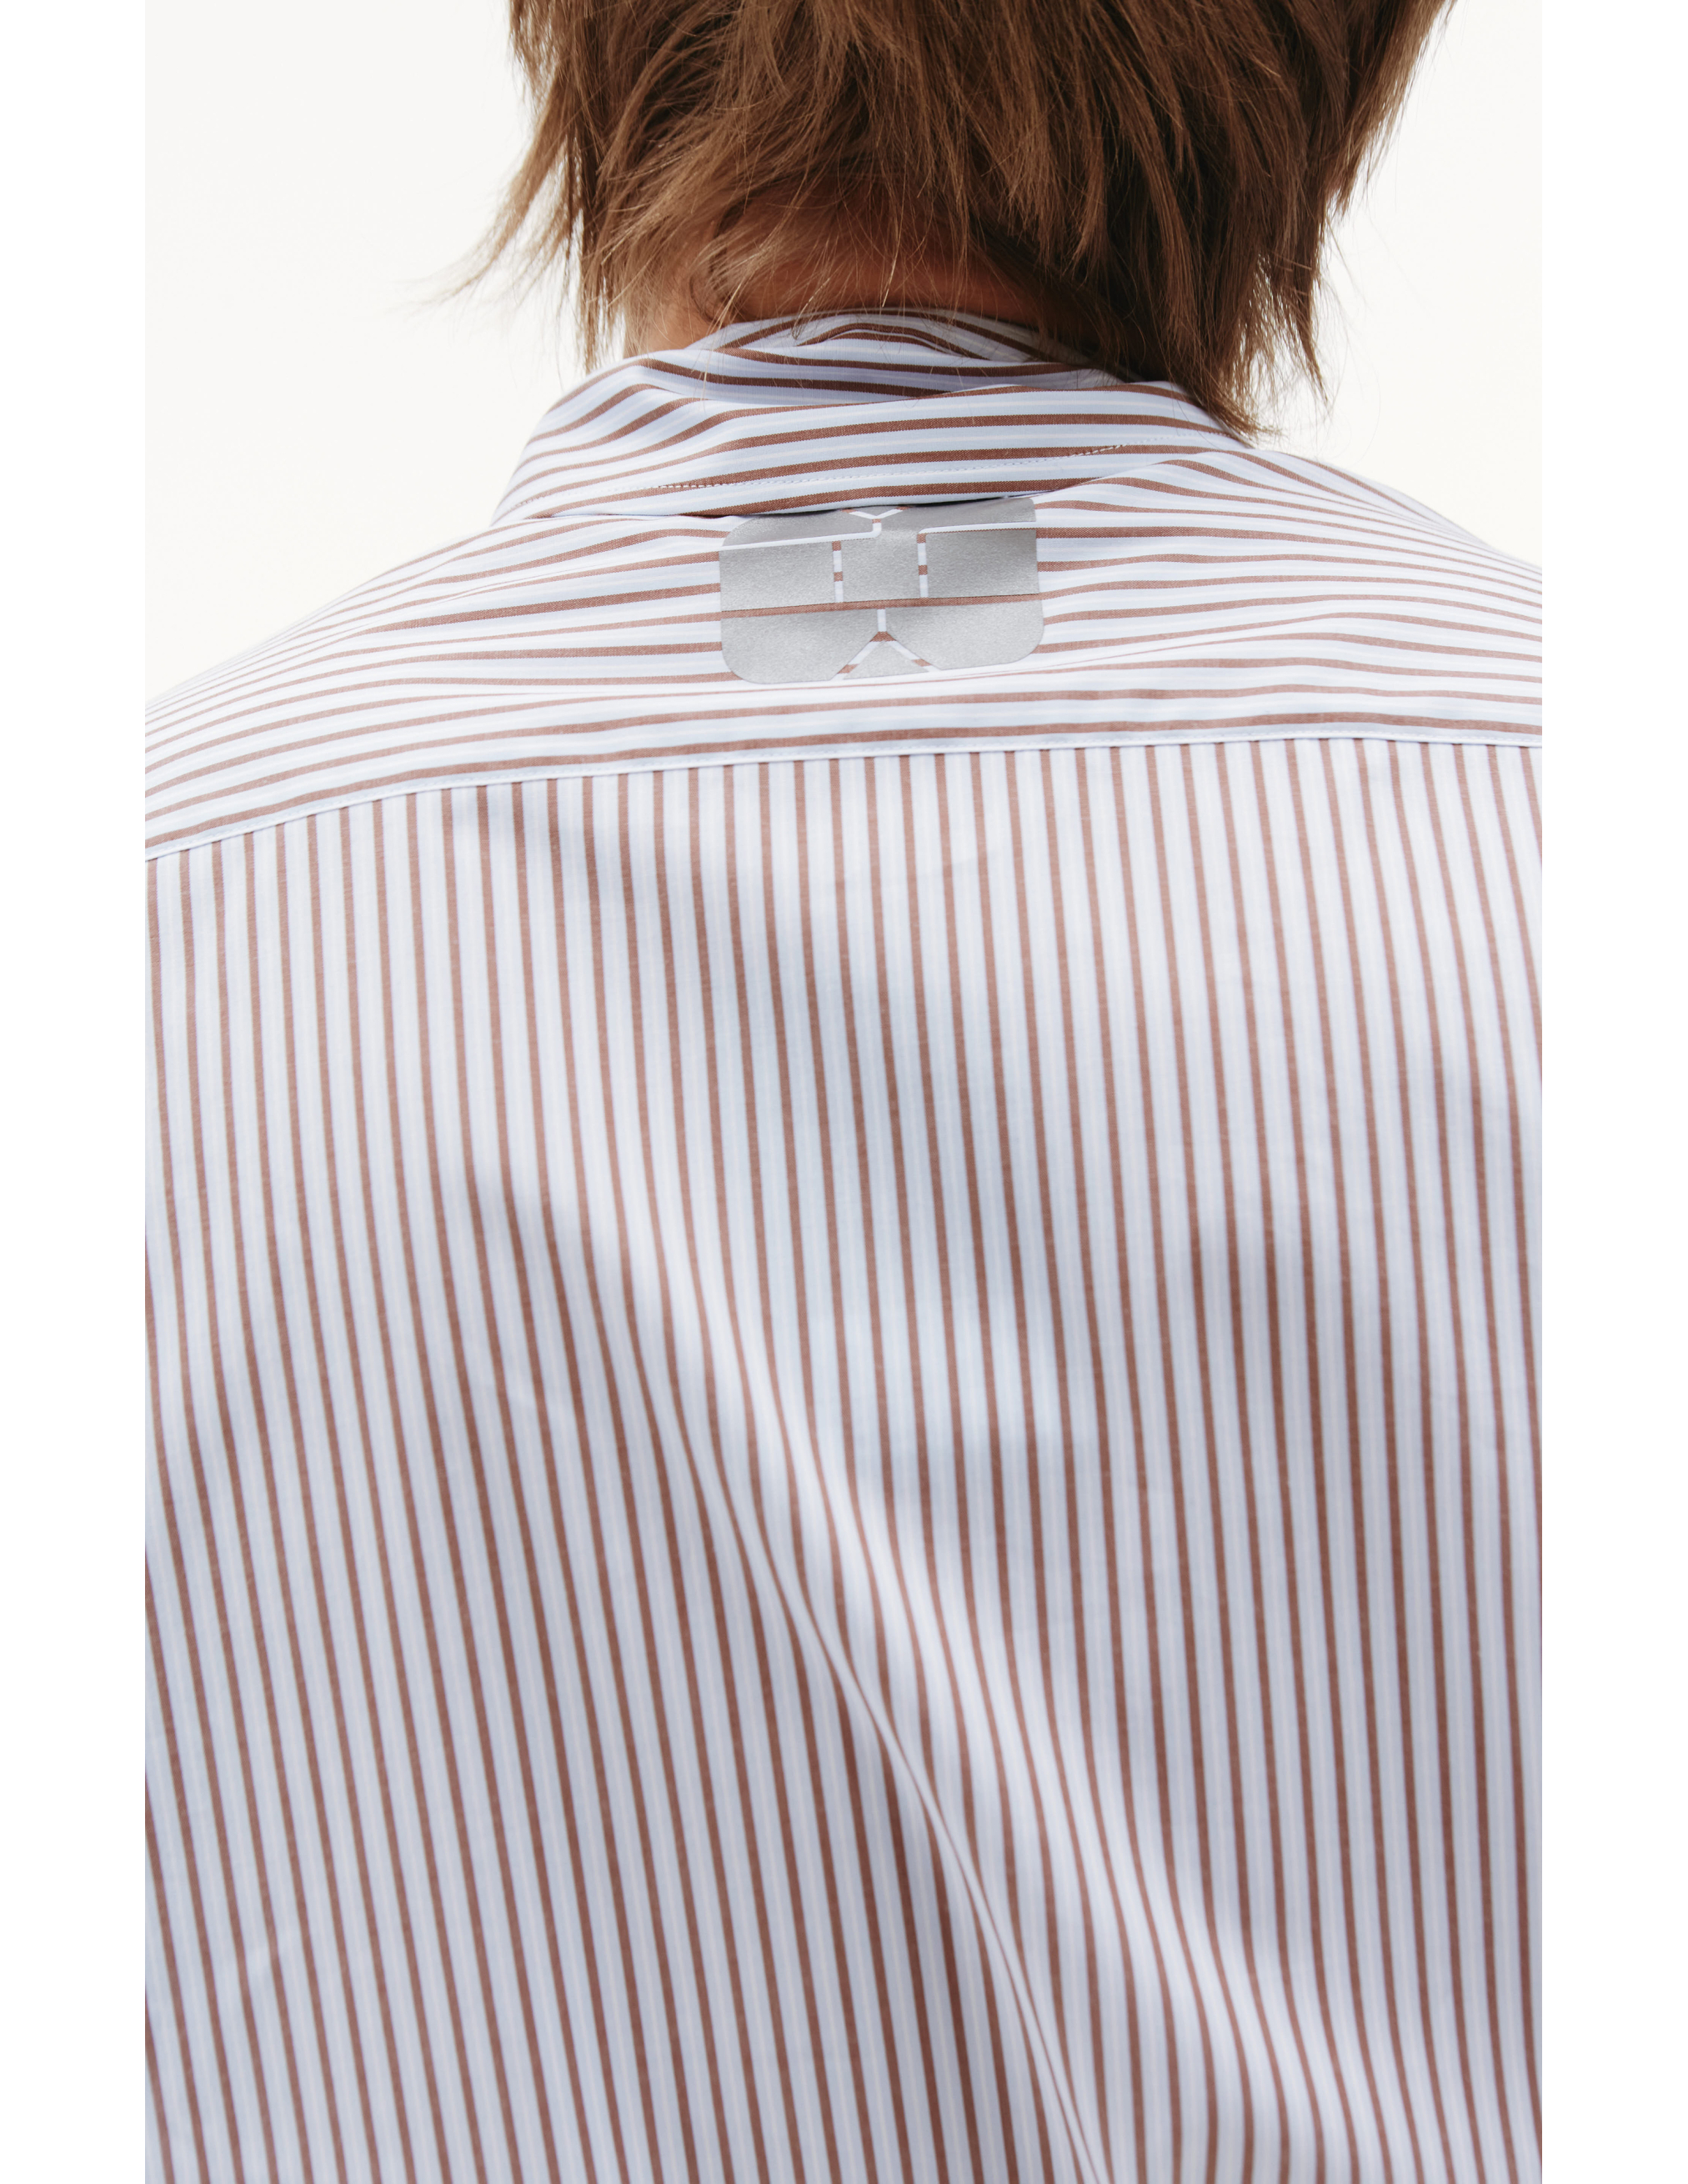 Голубая рубашка на молнии VTMNTS VL12SH300W, размер XL;L;M - фото 4